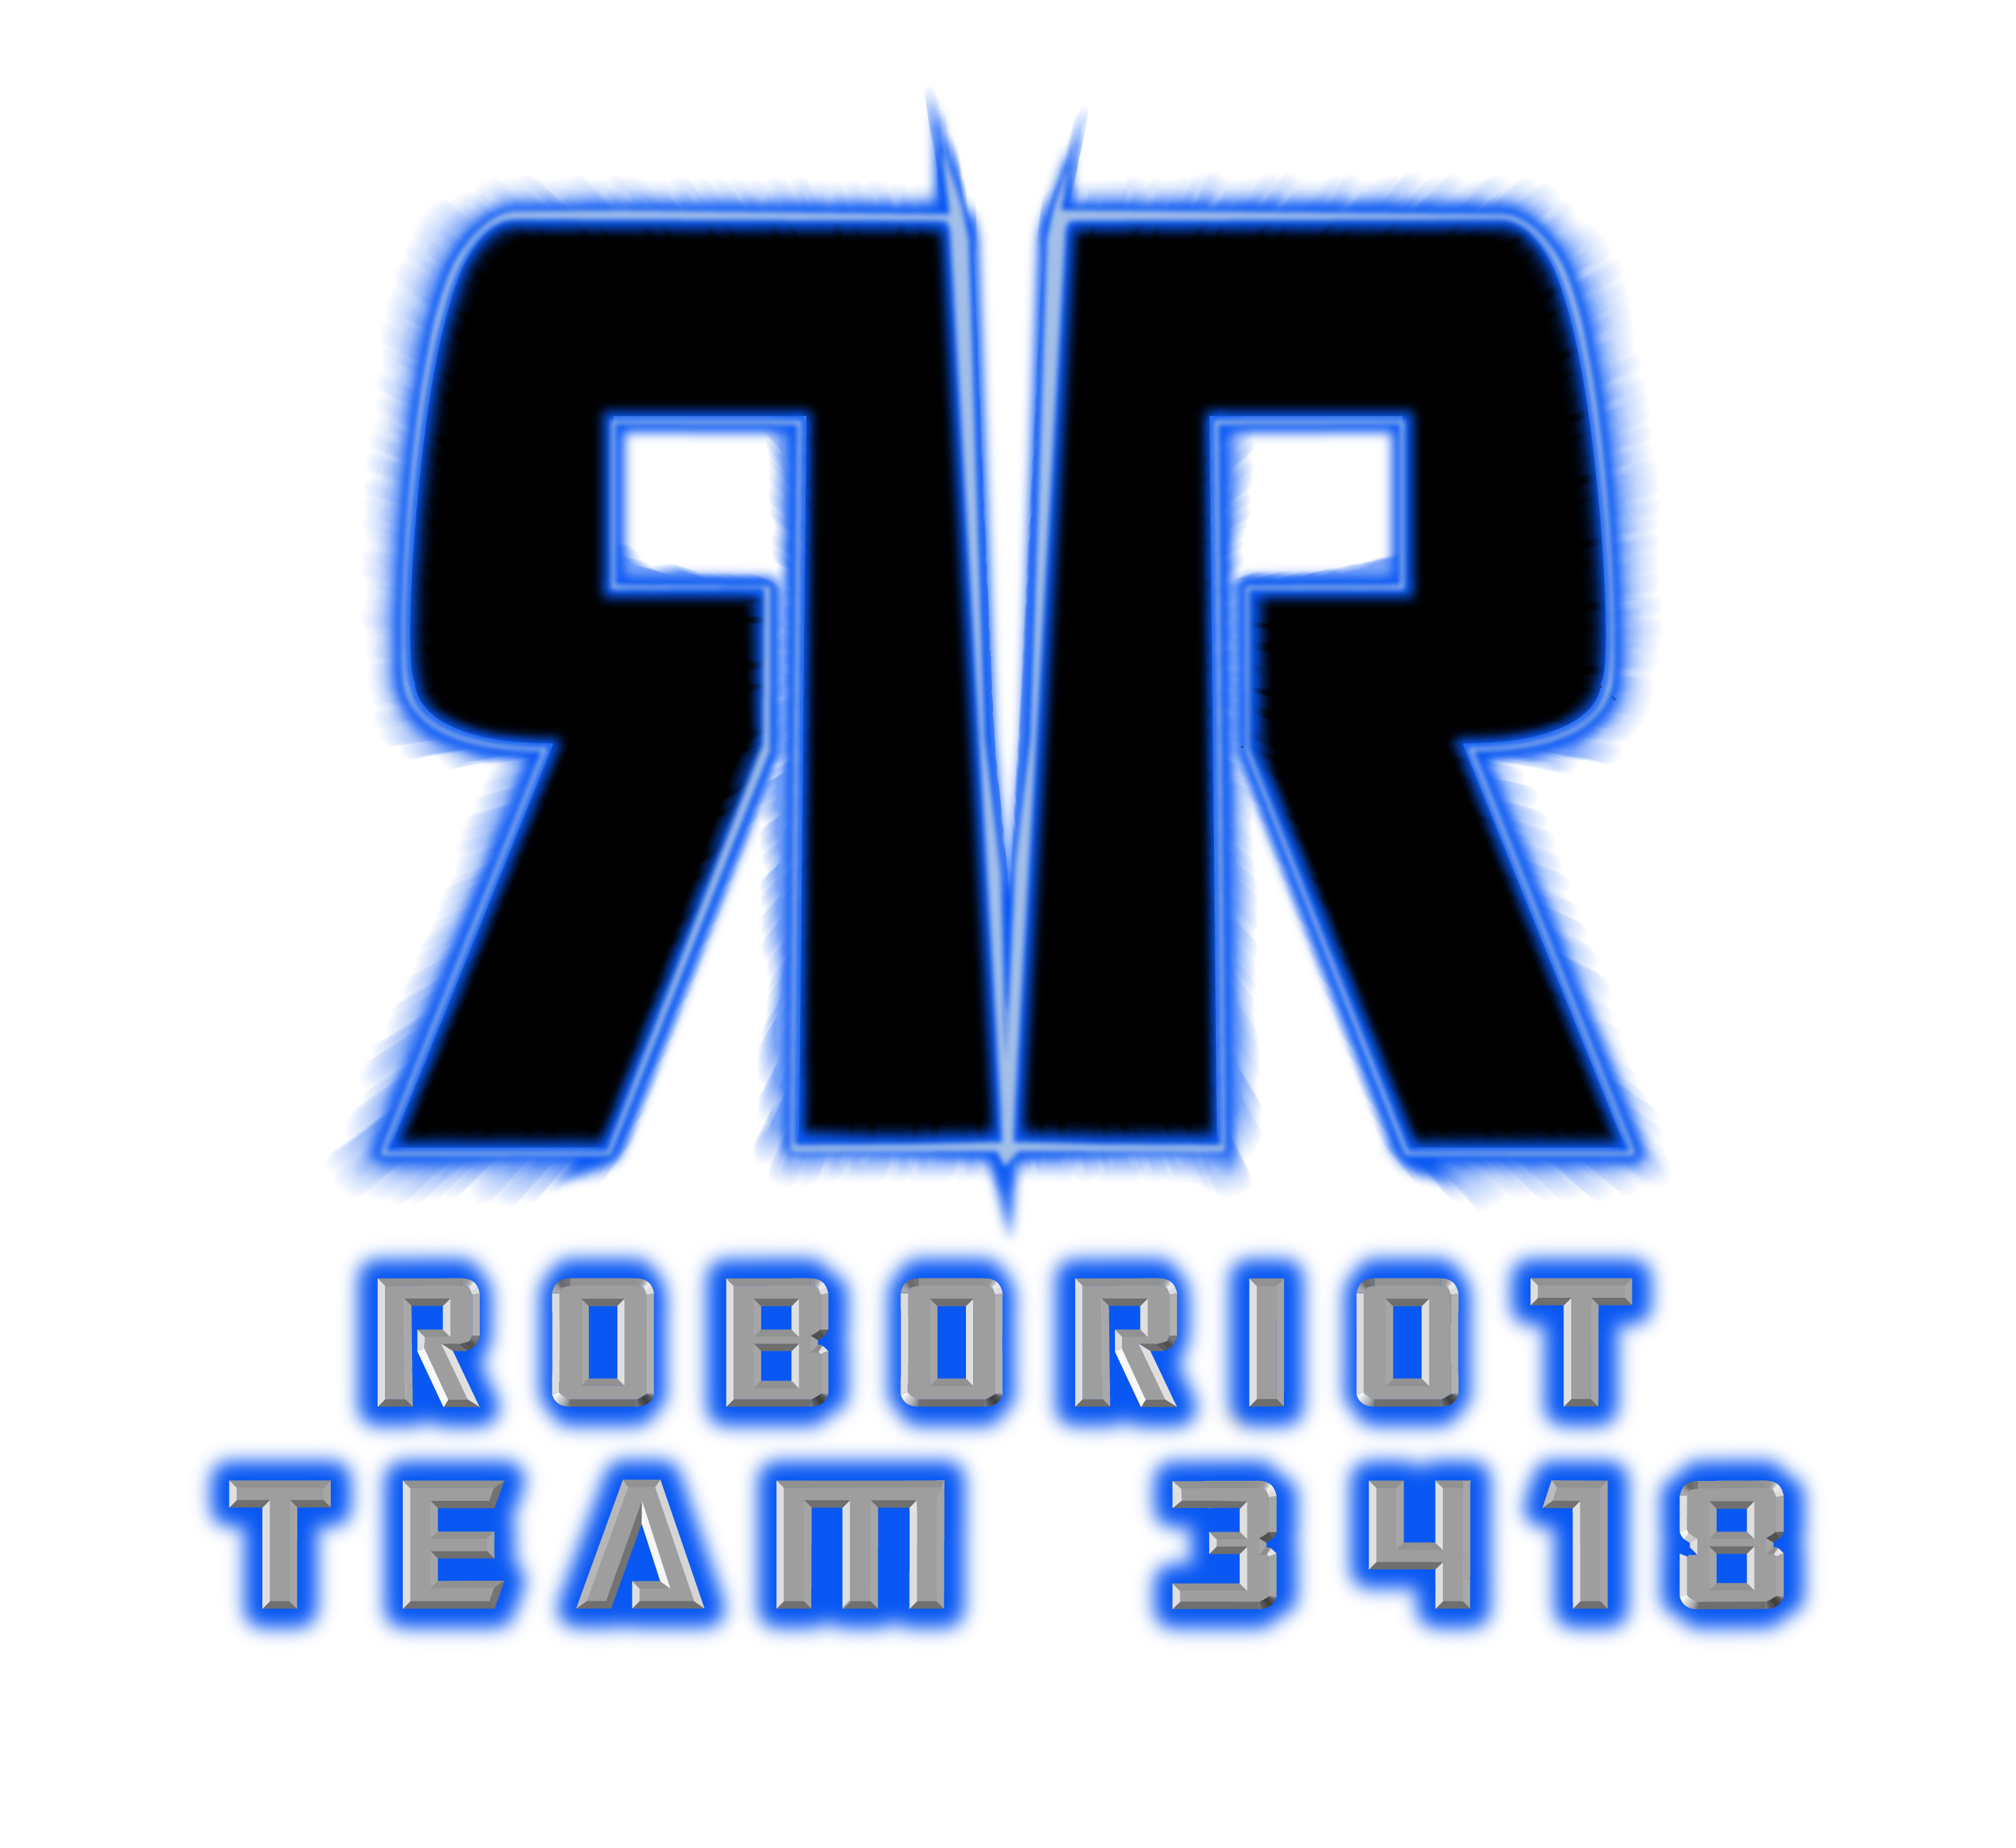 RoboRiot Team 3418 Outside 2